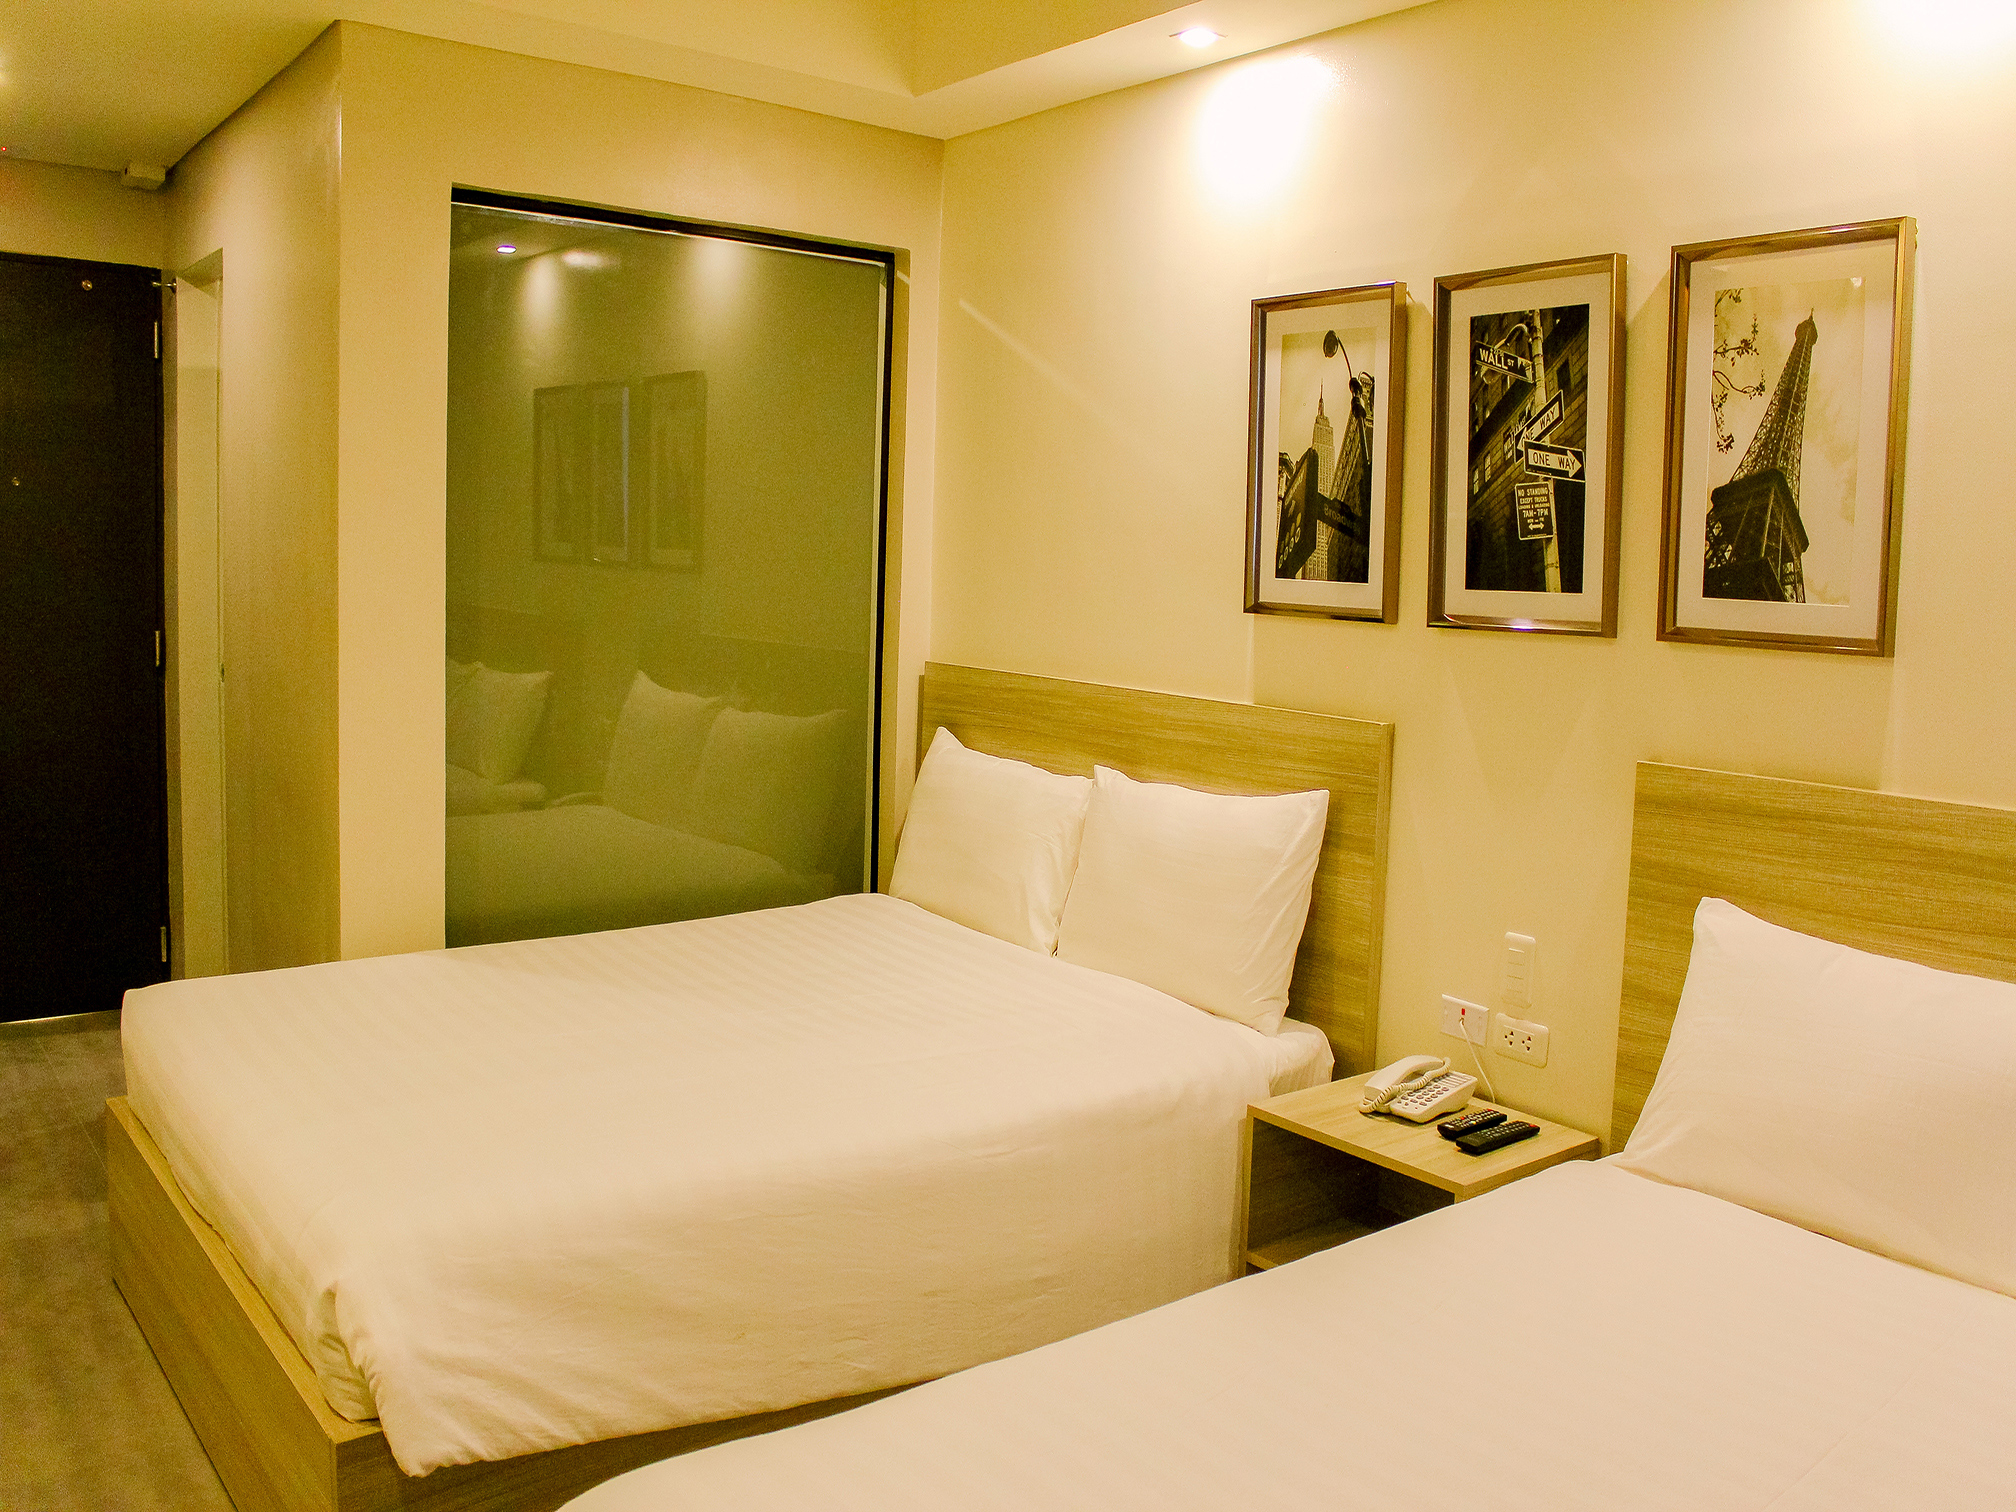 MABOLO ROYAL HOTEL Images Cebu Videos